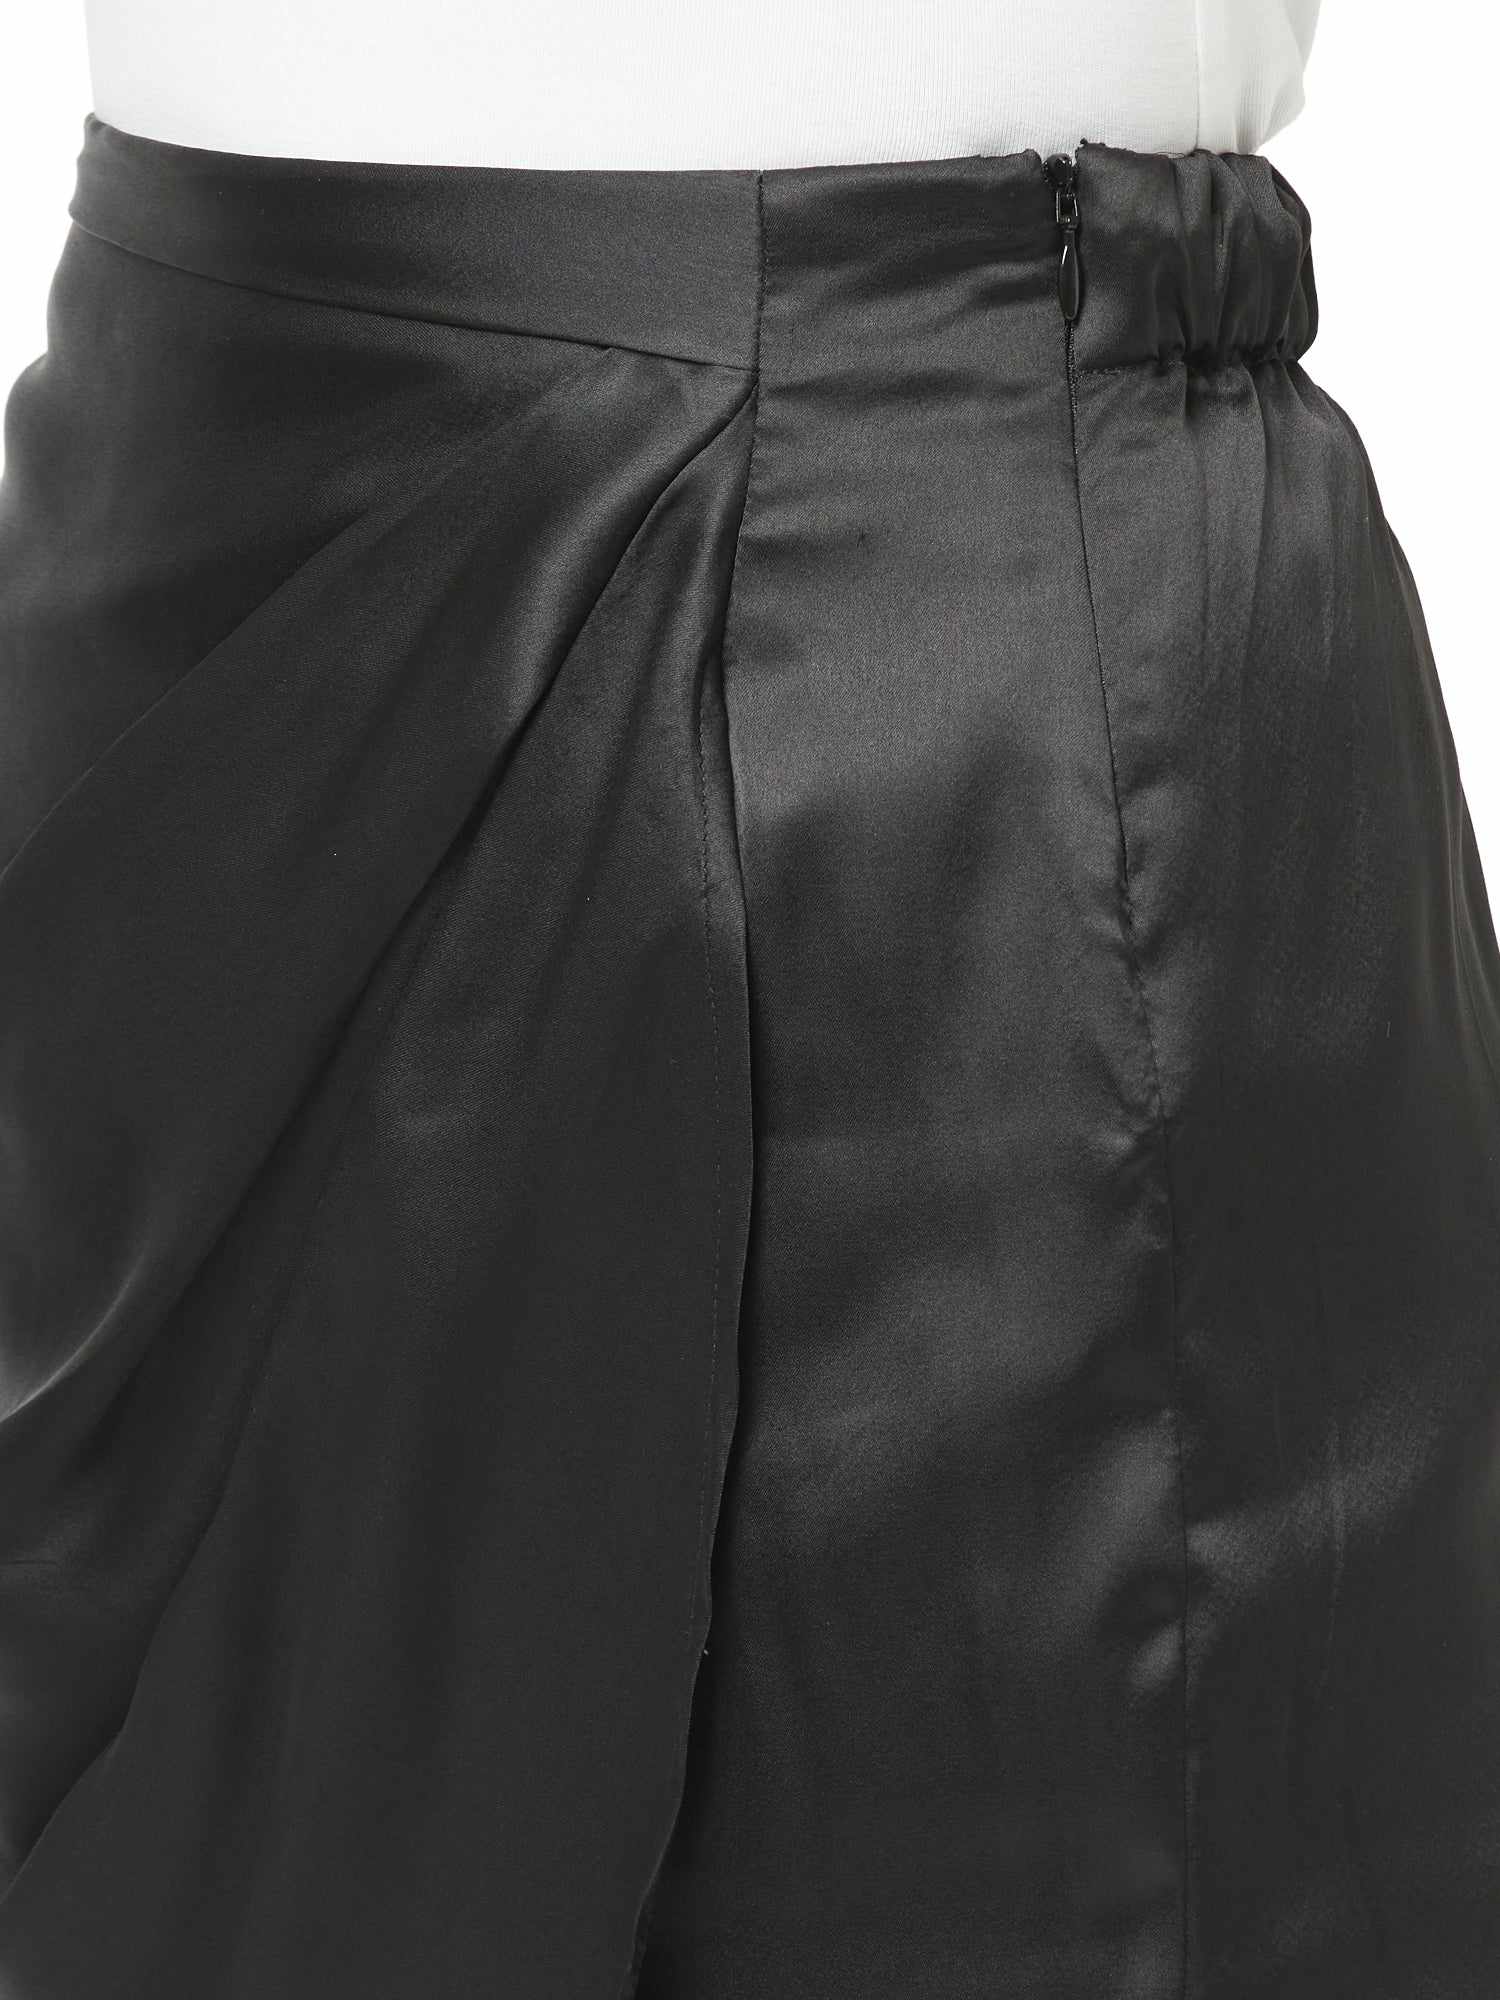 shiny satin black pleated wrap skirt